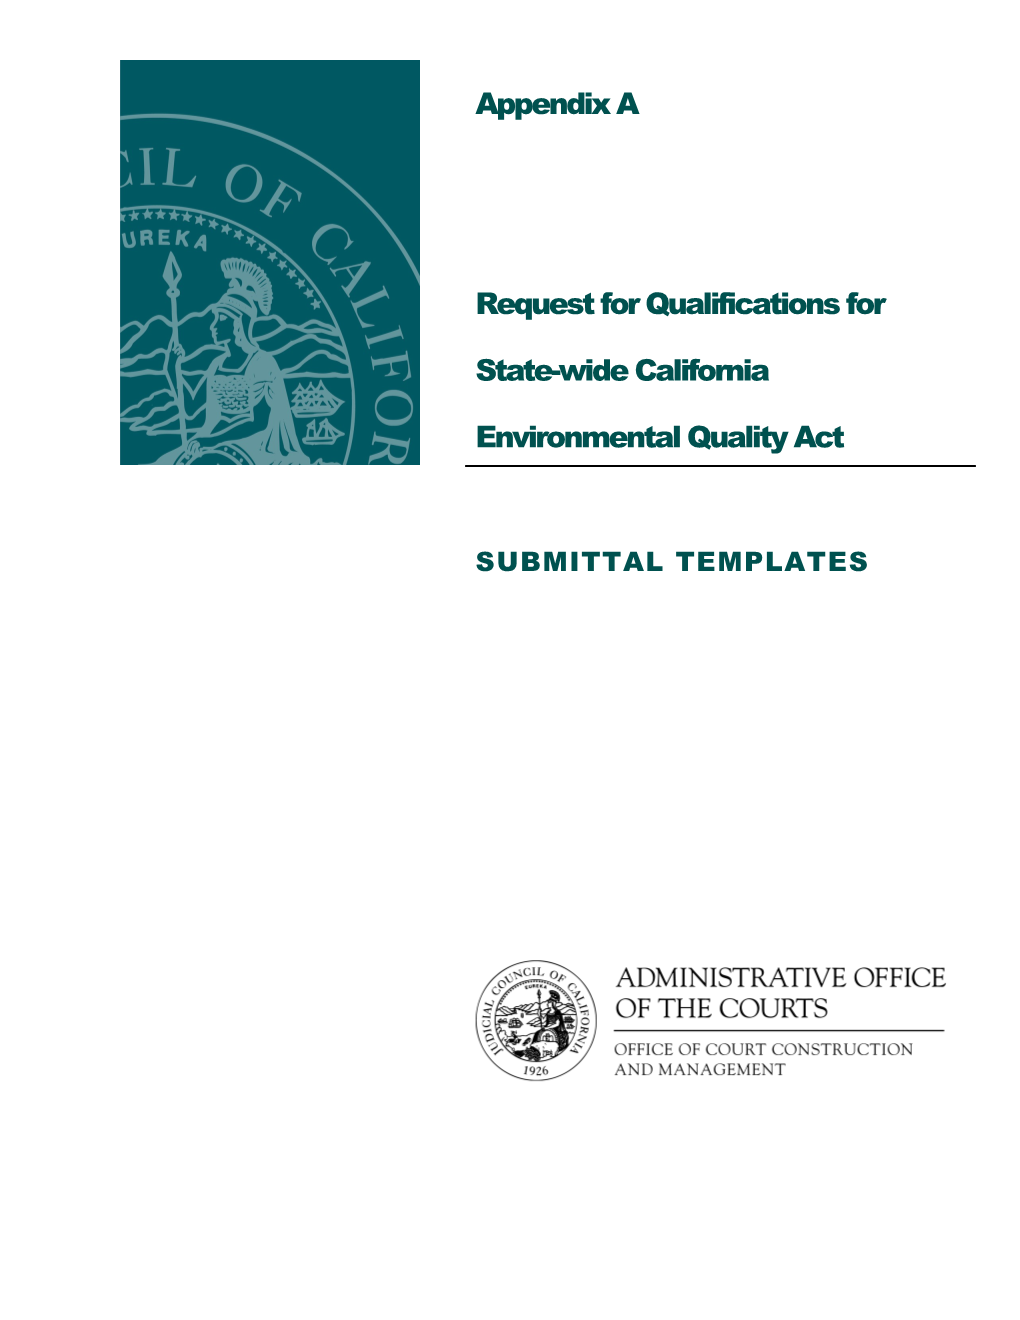 California Environmental Quality Act Services